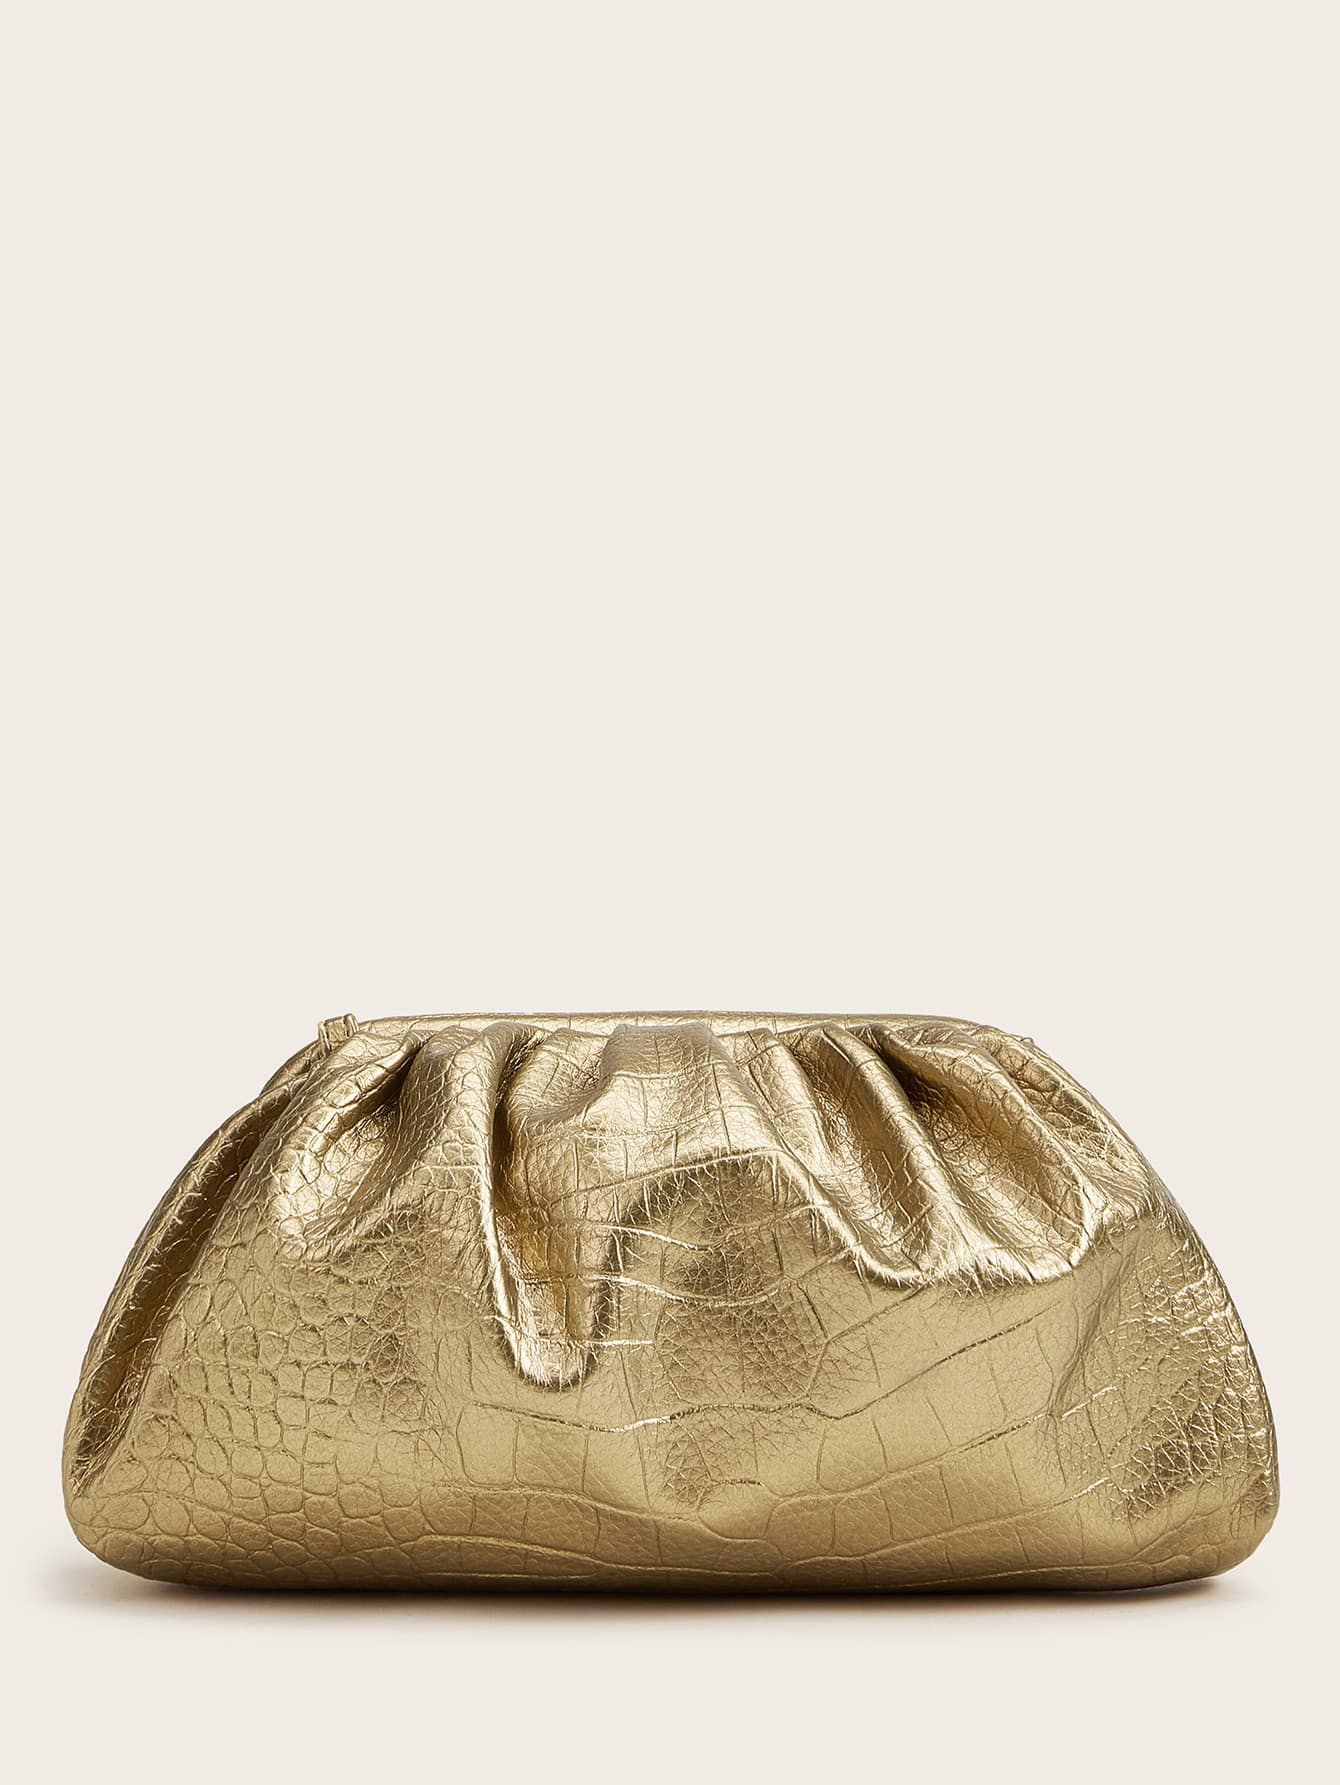 Elegant Gold Clutch Bag For A Careful
Choice